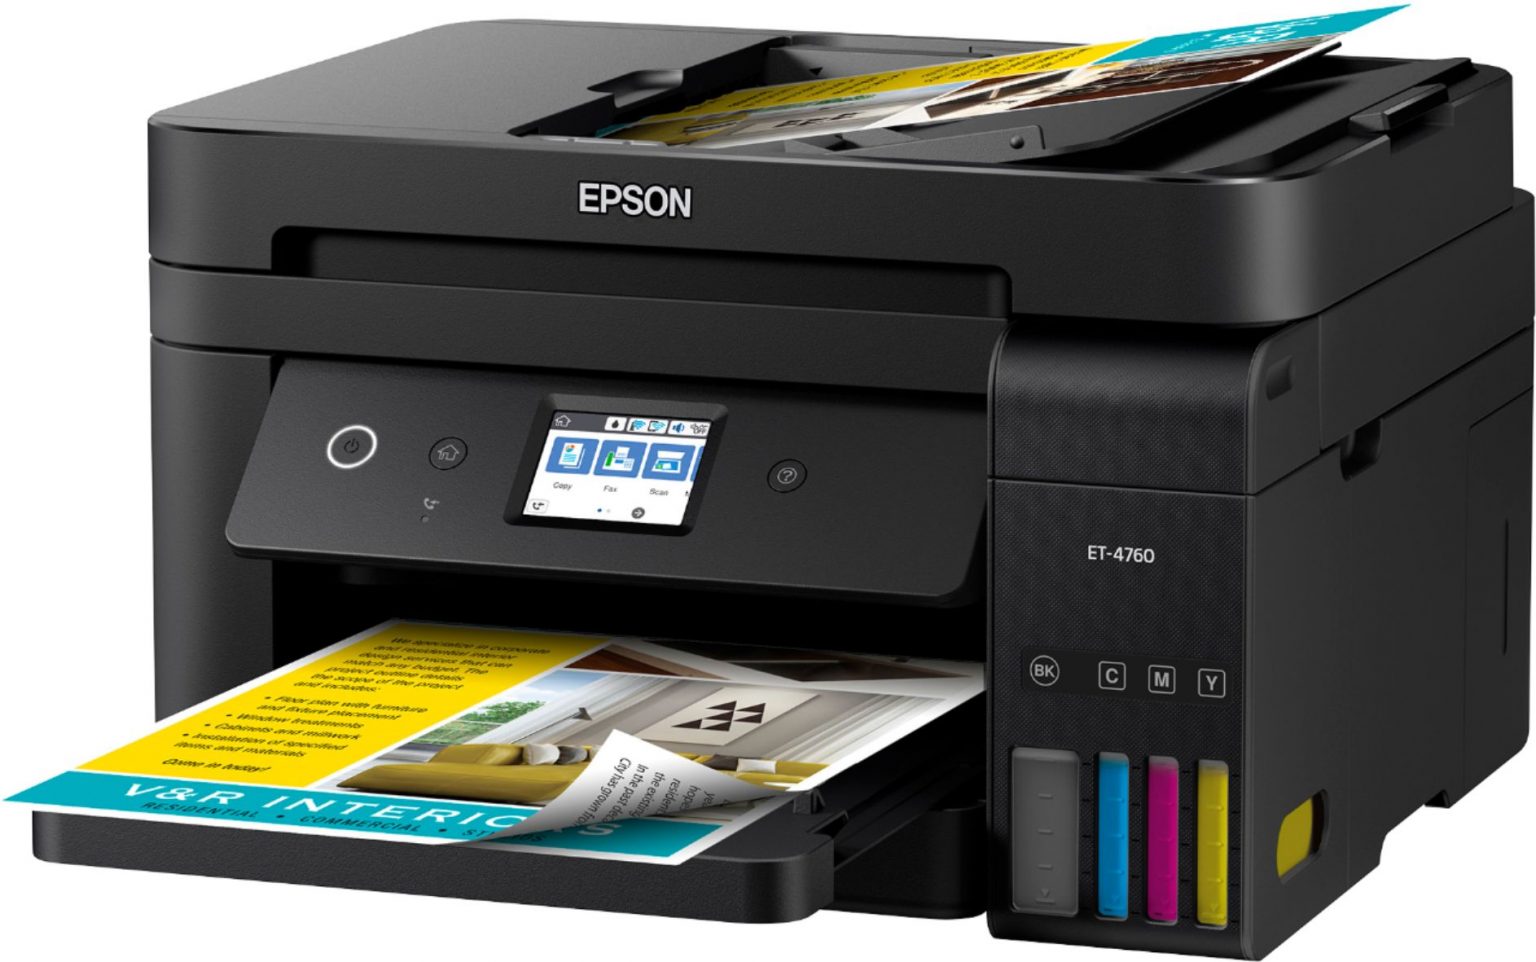 Epson Ecotank Et 4760 All In One Printer Dreams4less 5863